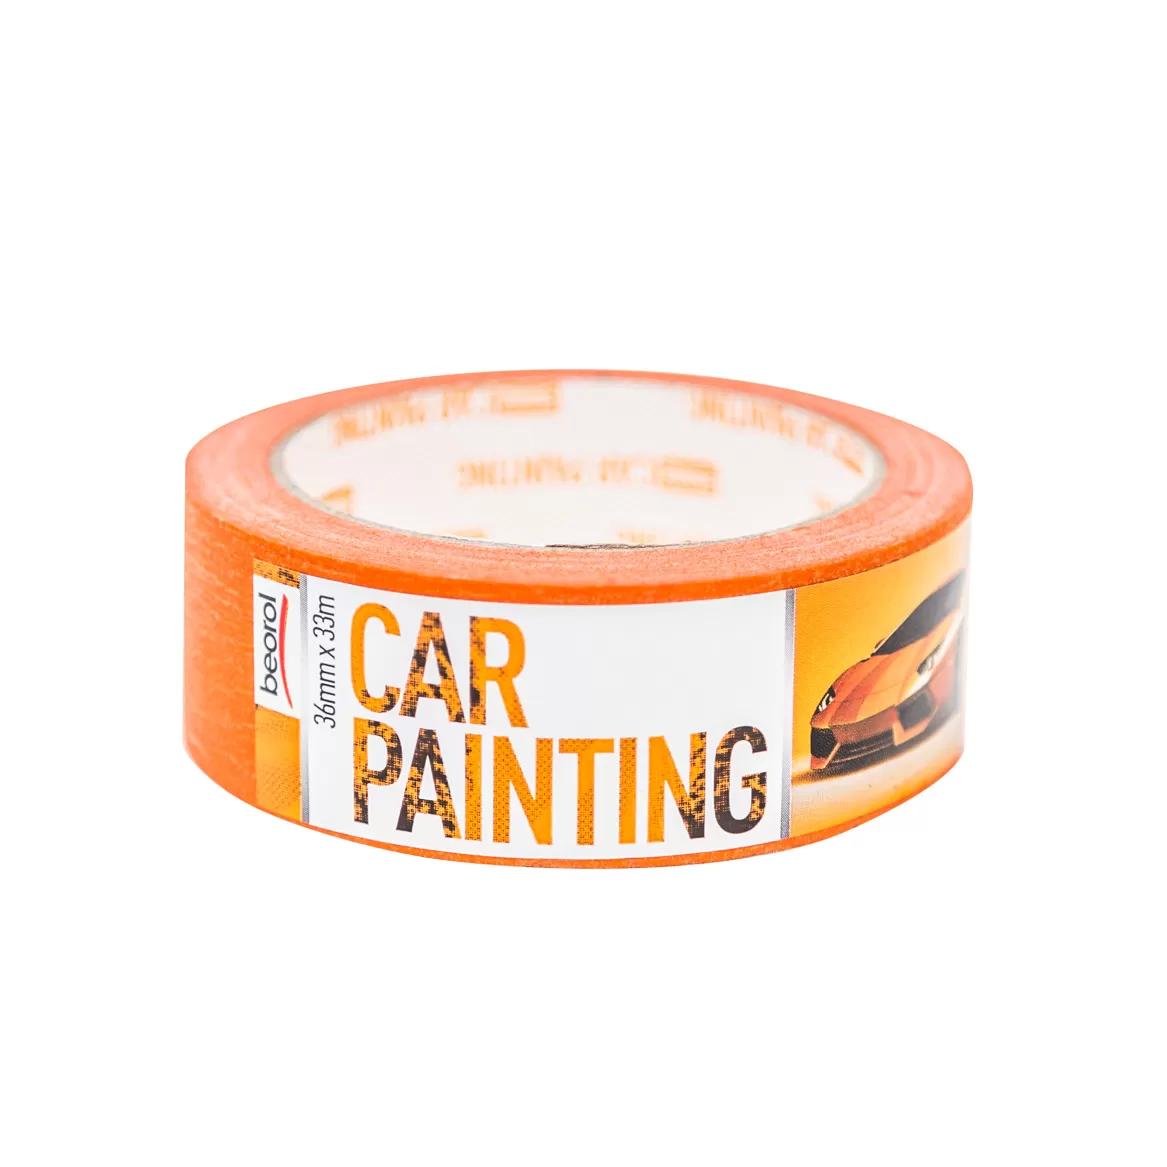 Car-painter masking tape 36mm x 33m, 100ᵒC 